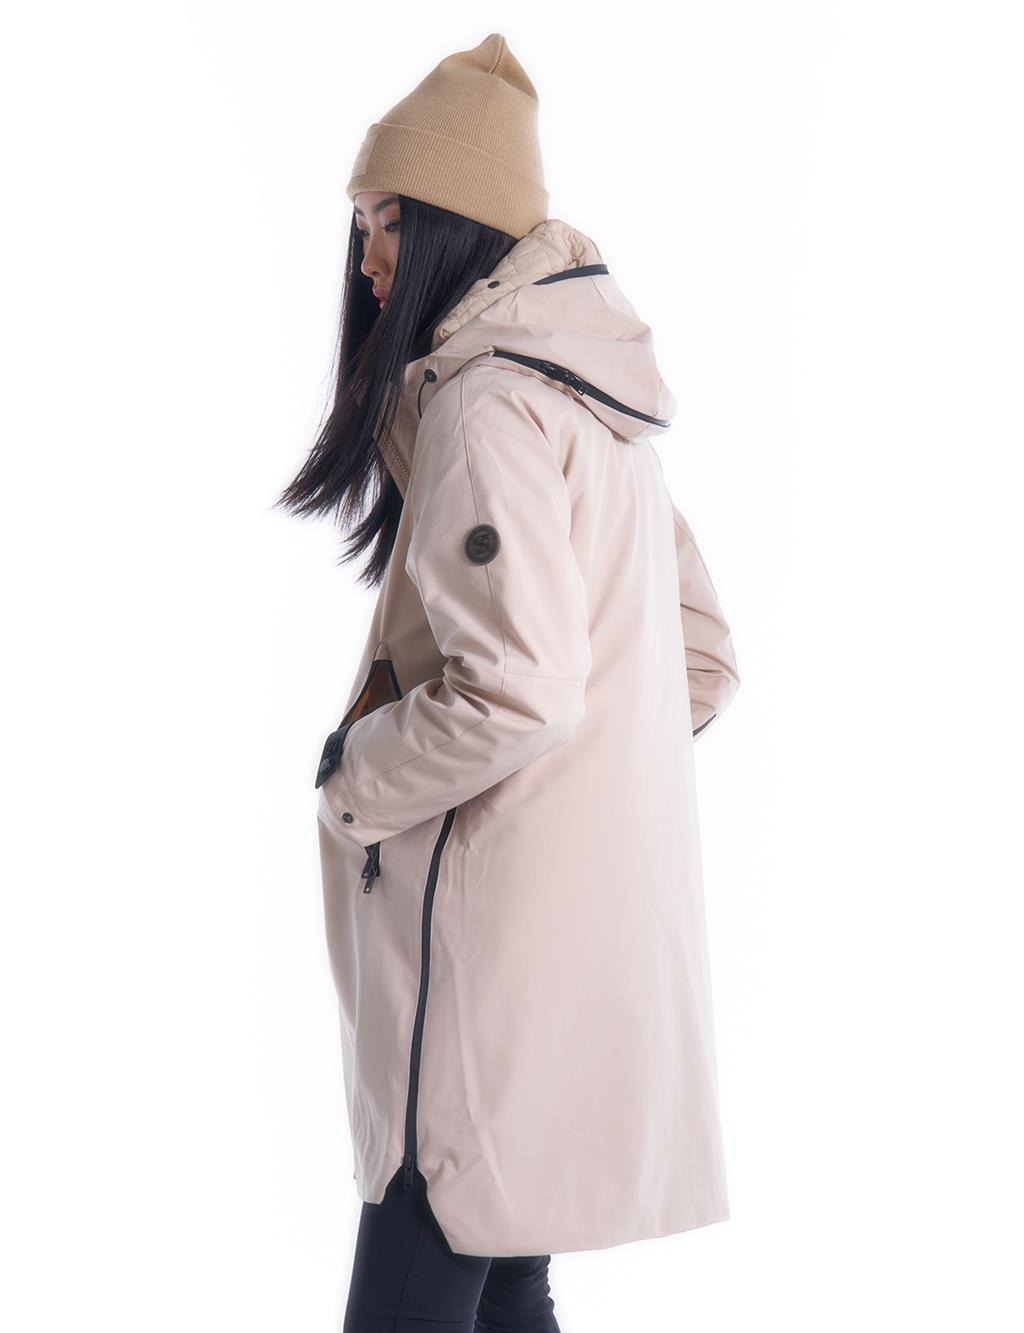 3in1 Multipe Use Coat I Raincoat I Jacket in Beige